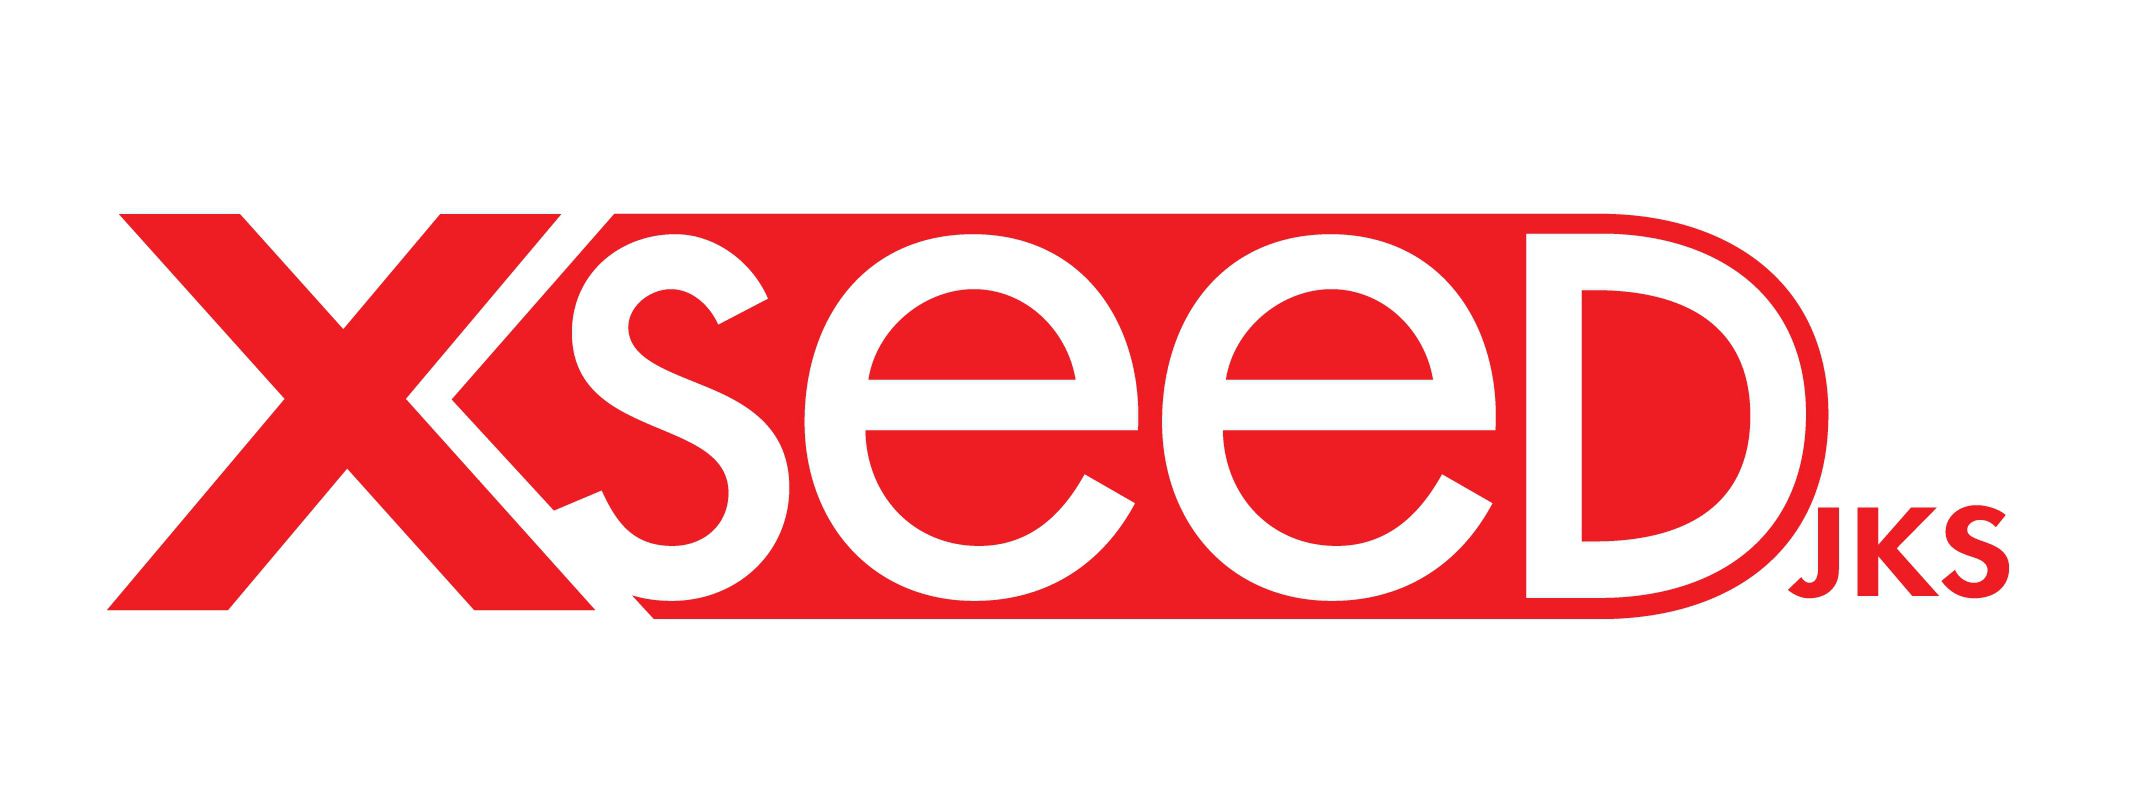 XSEED Games   logo